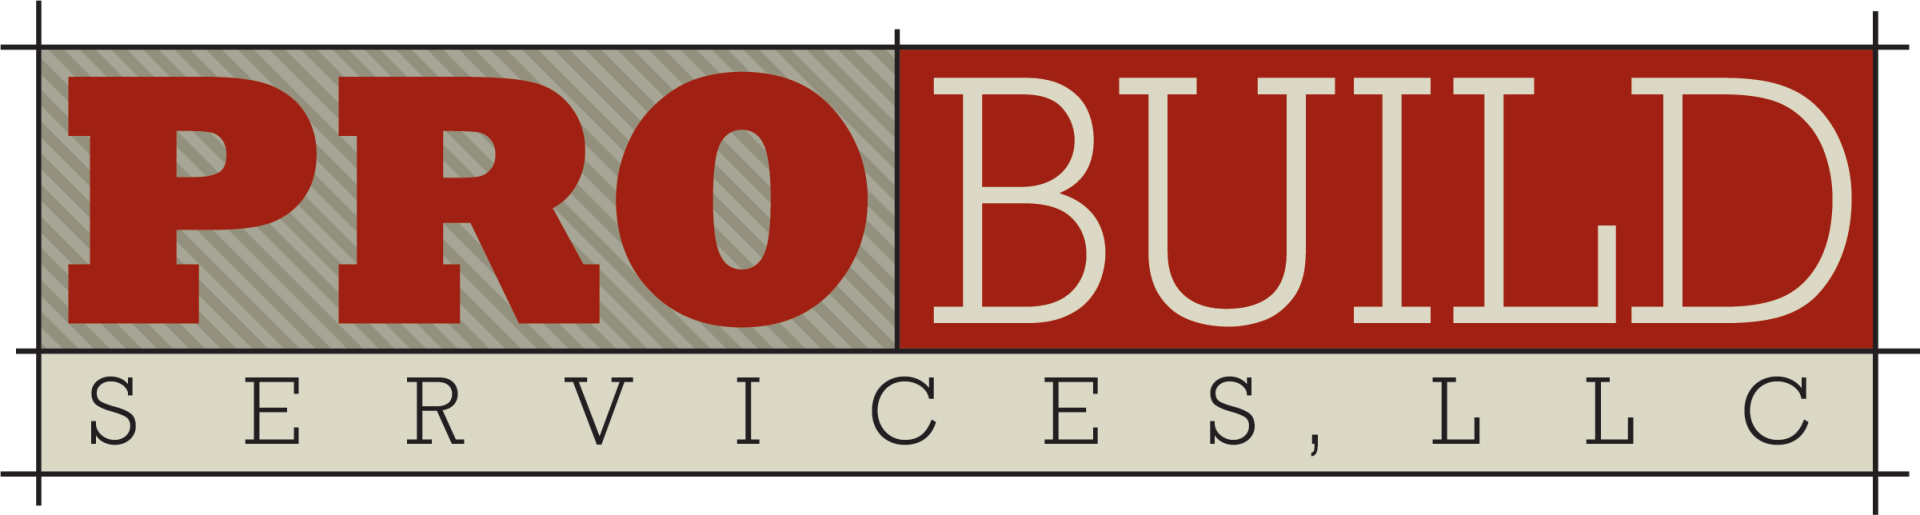 ProBuild Services logo